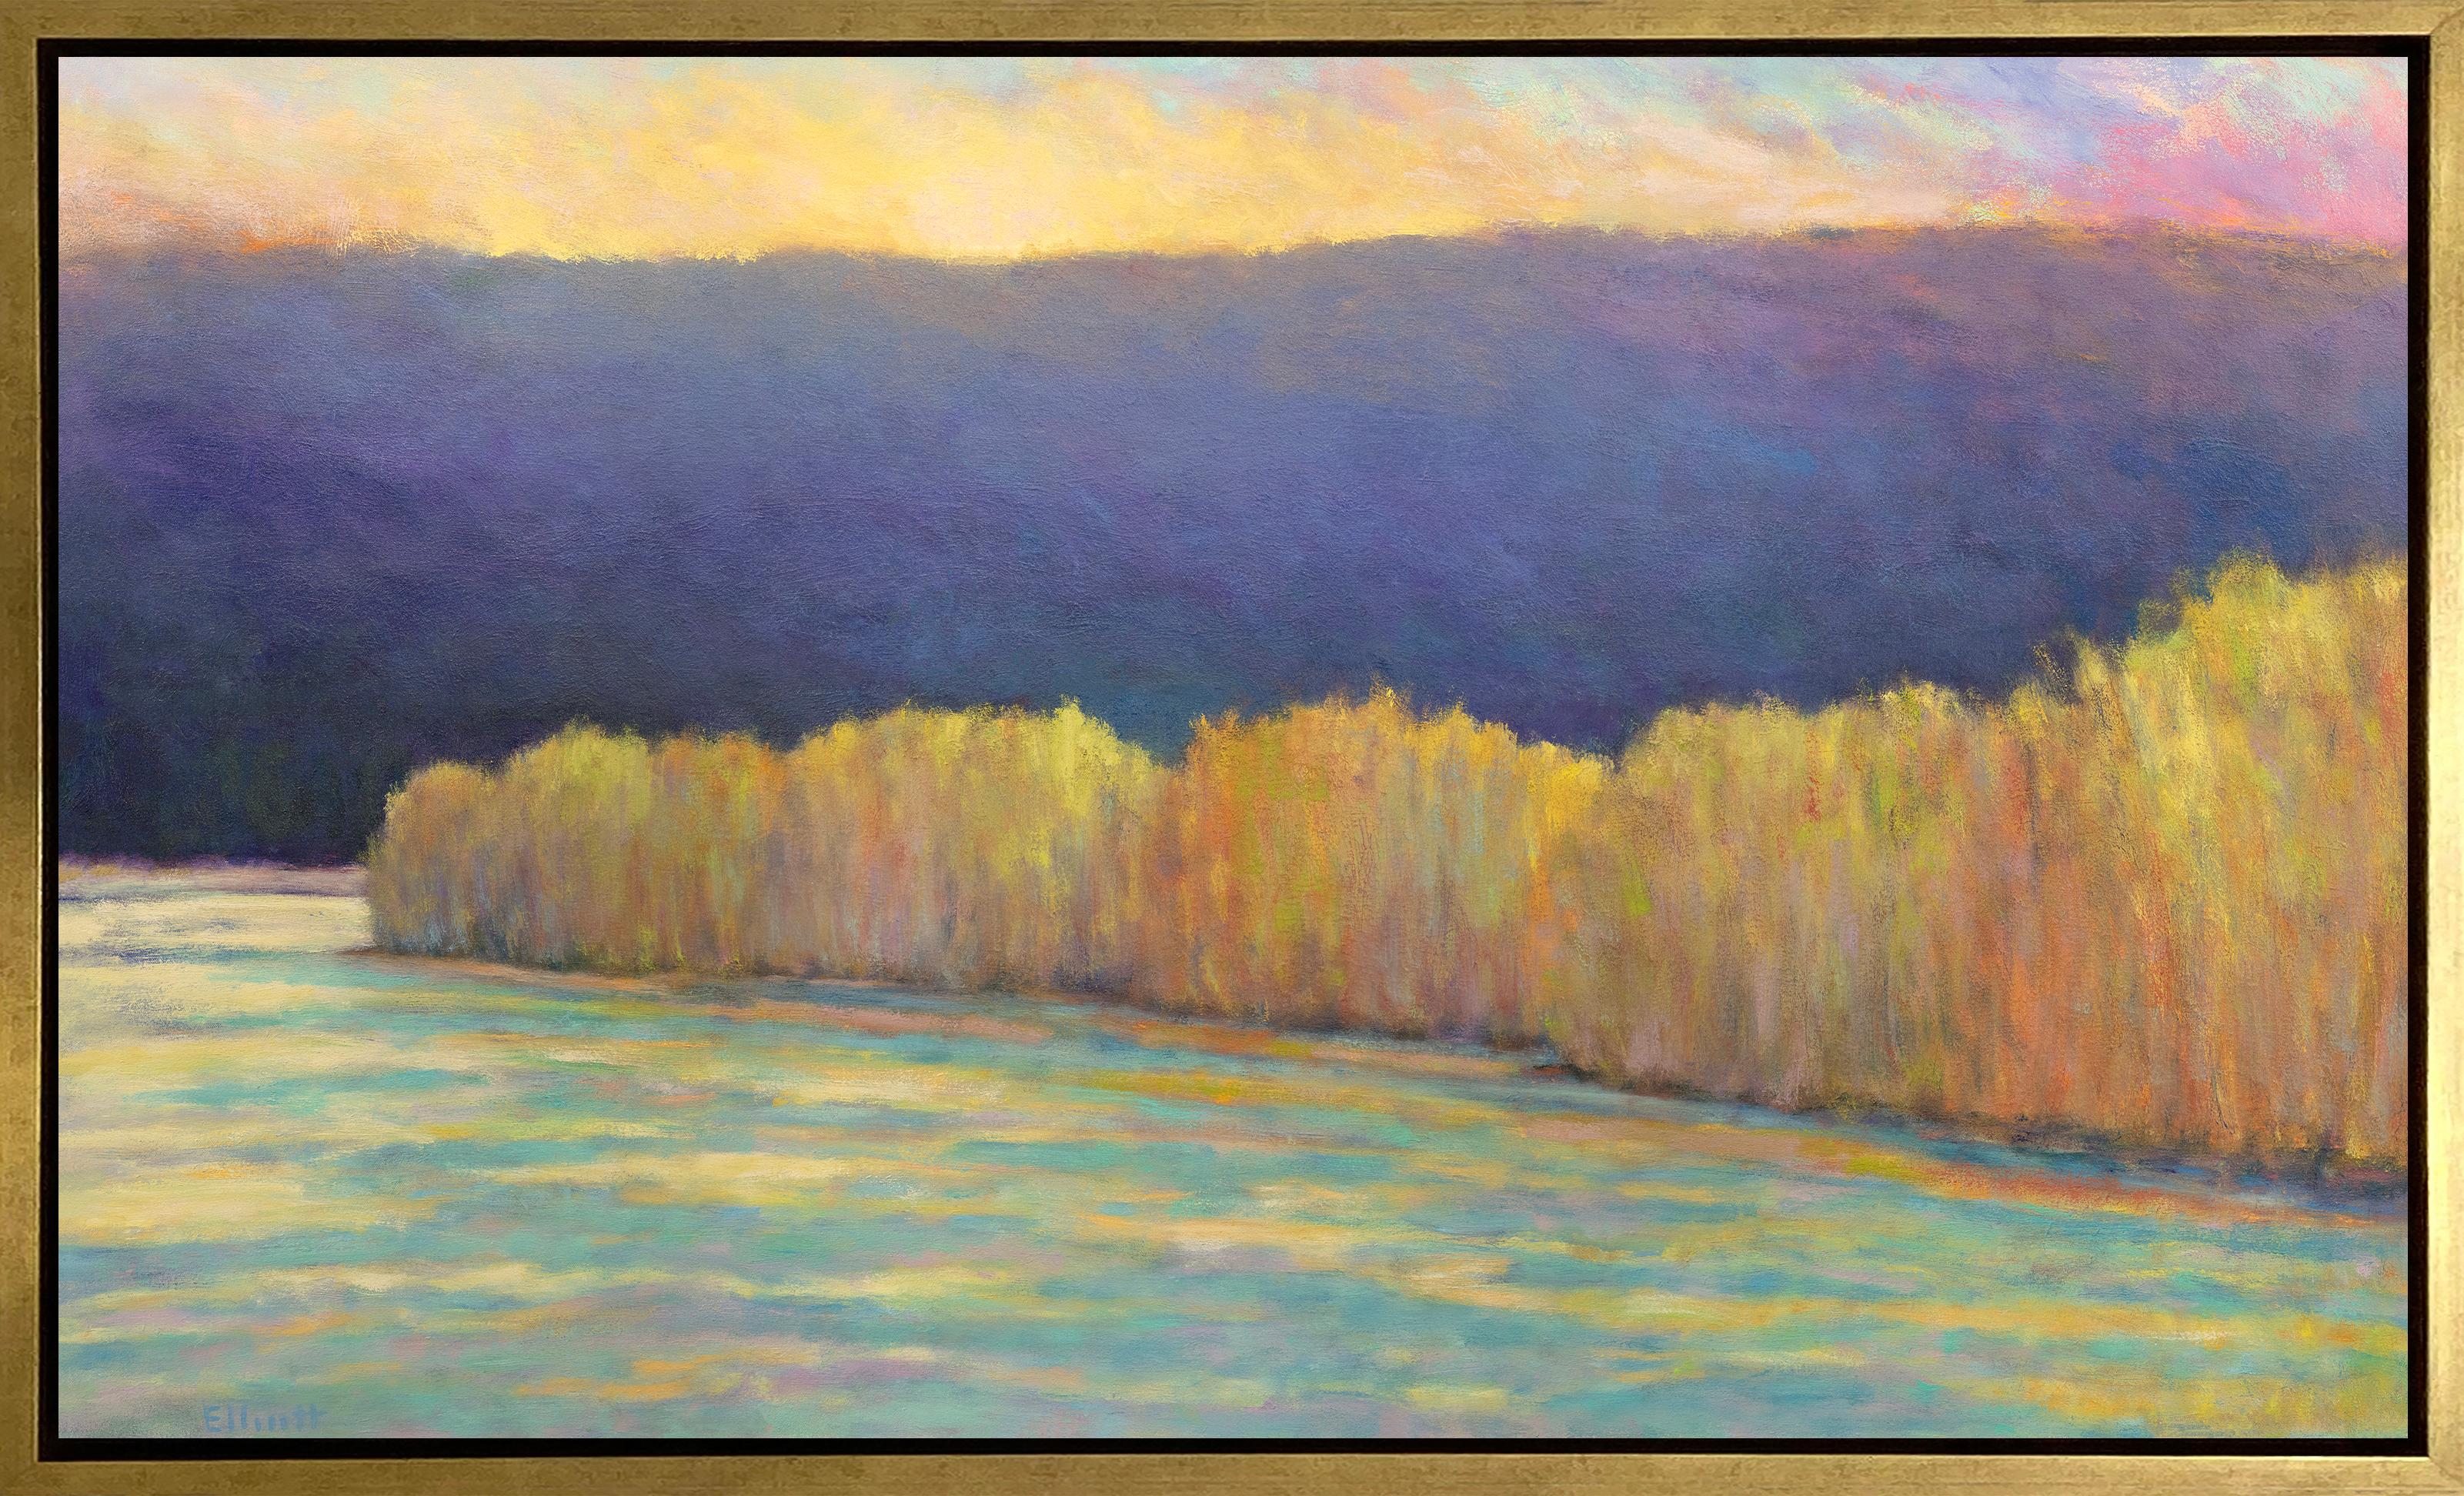 Ken Elliott Landscape Print - "Gold at the River, " Framed Limited Edition Giclee Print, 24" x 40"